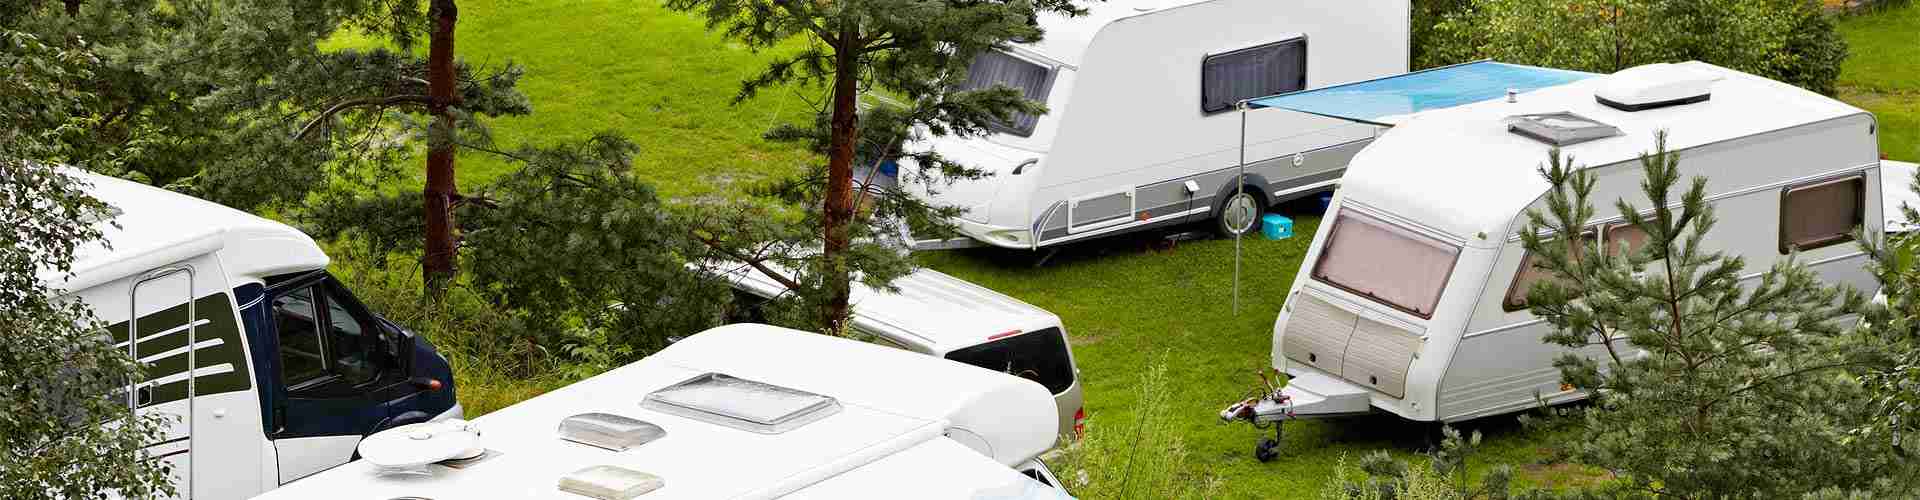 Campings y bungalows en Navarra